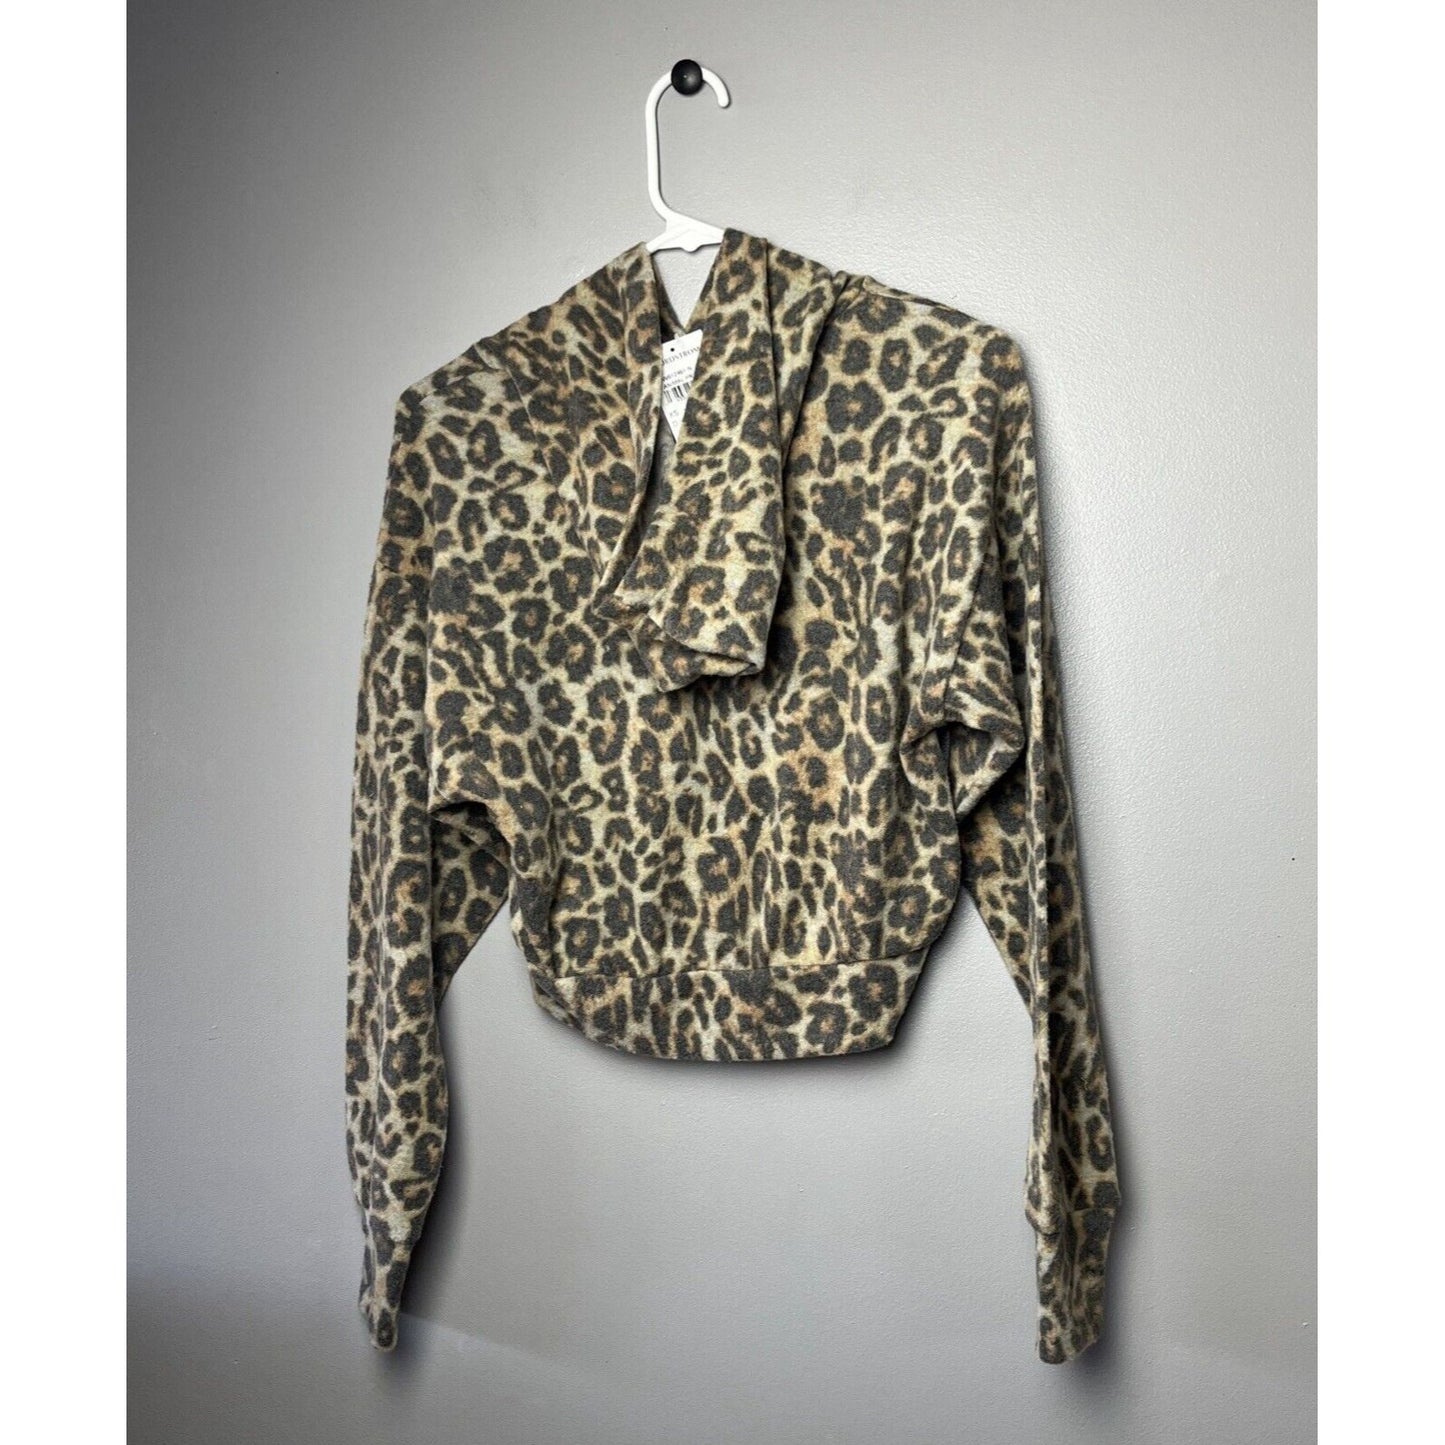 NWT Socialite Juniors Women's Lightweight Leopard Print Pullover Hoodie Size XS